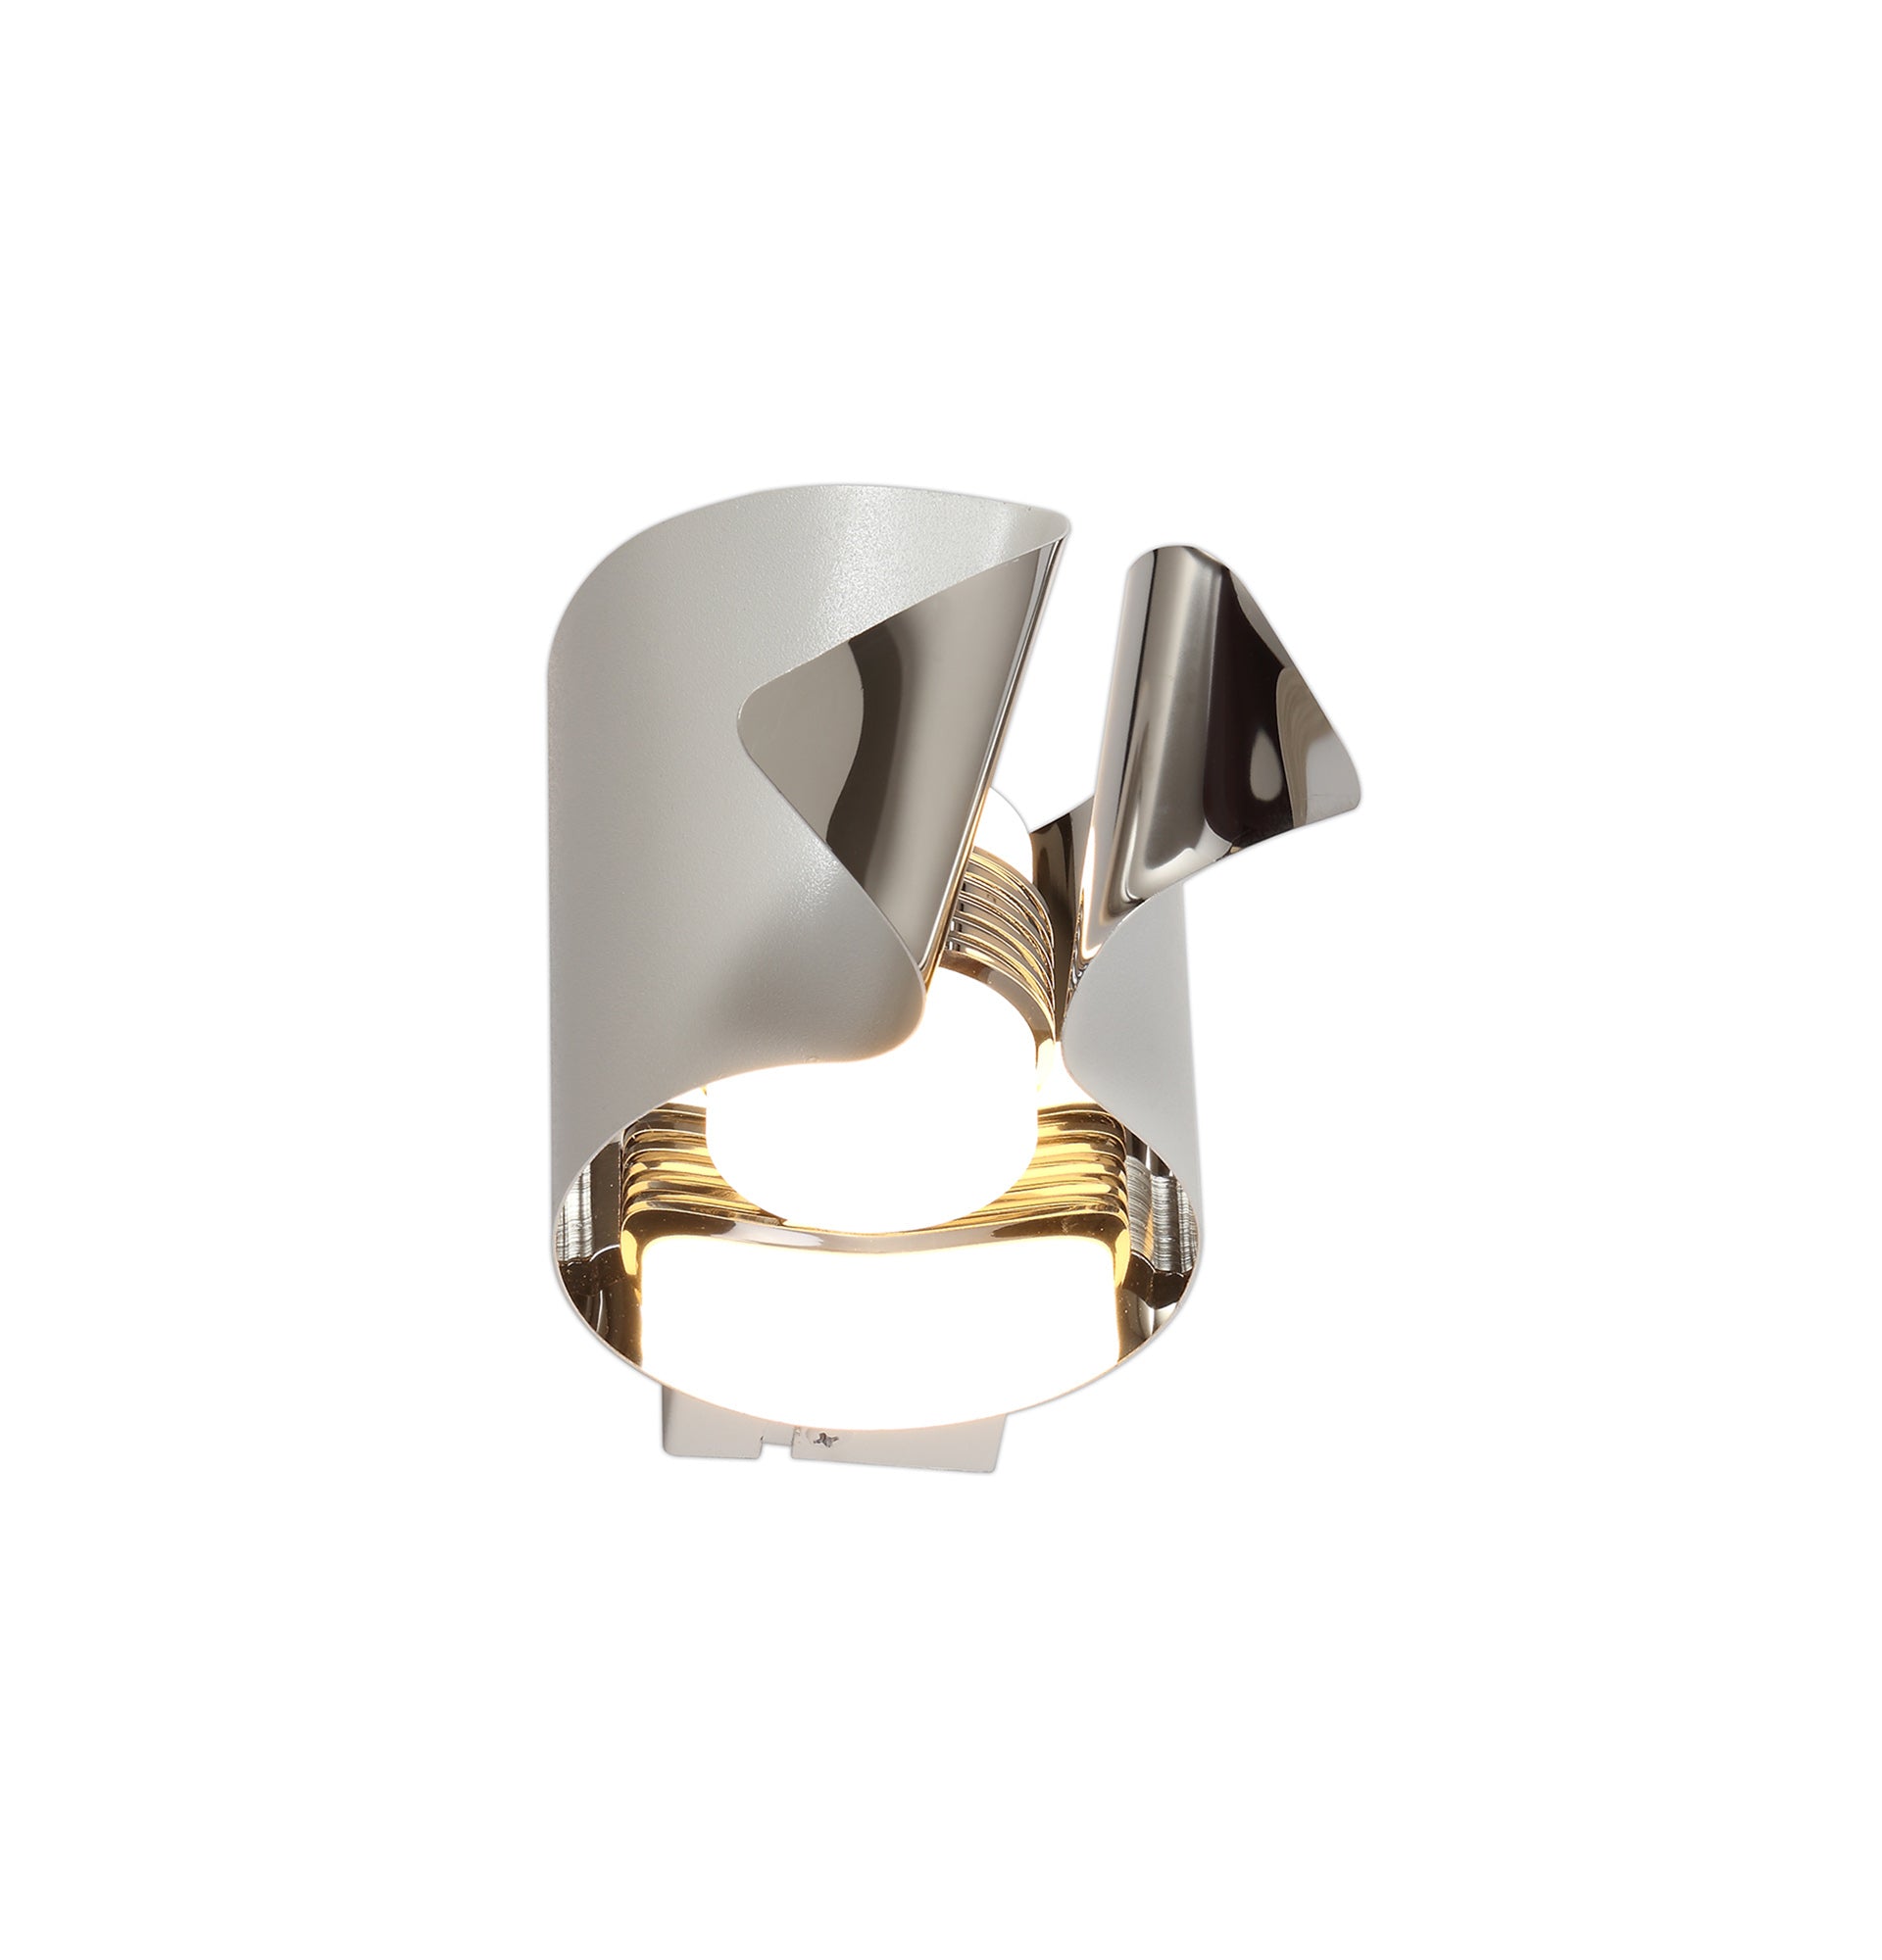 Brice Wall Lamp, 1 x 7W LED, 3000K, 490lm, Sand White/Polished Chrome, 3yrs Warranty